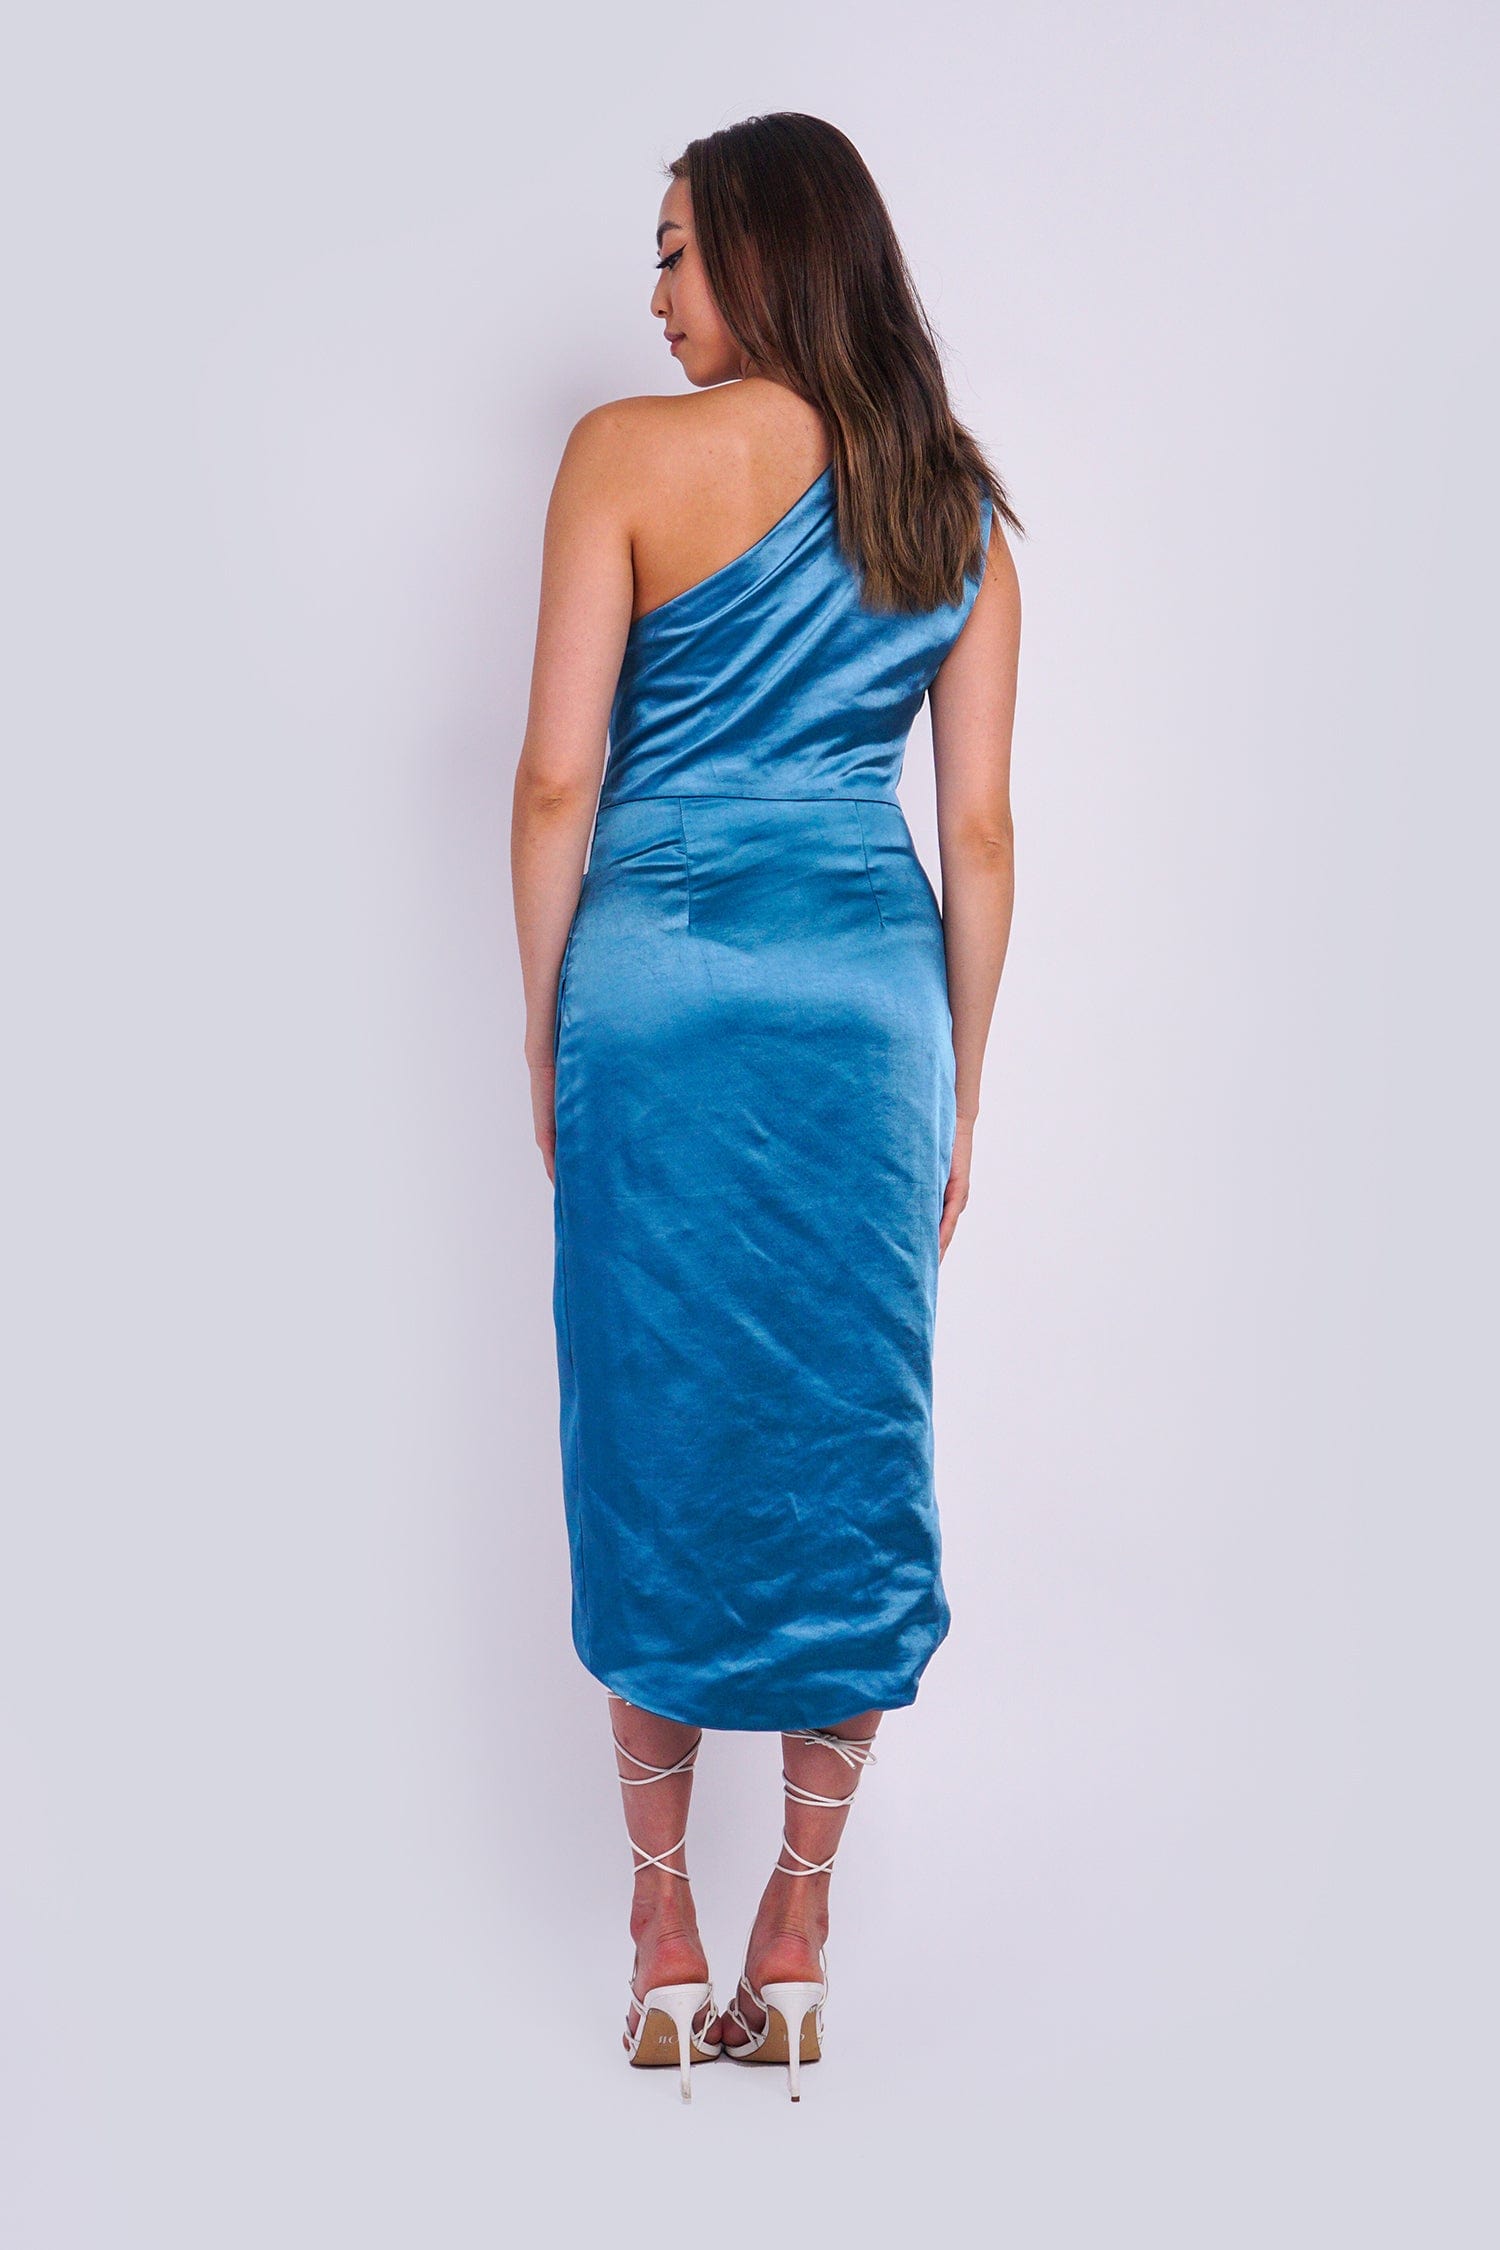 DCD DRESSES Blue One Shoulder Drape Dress